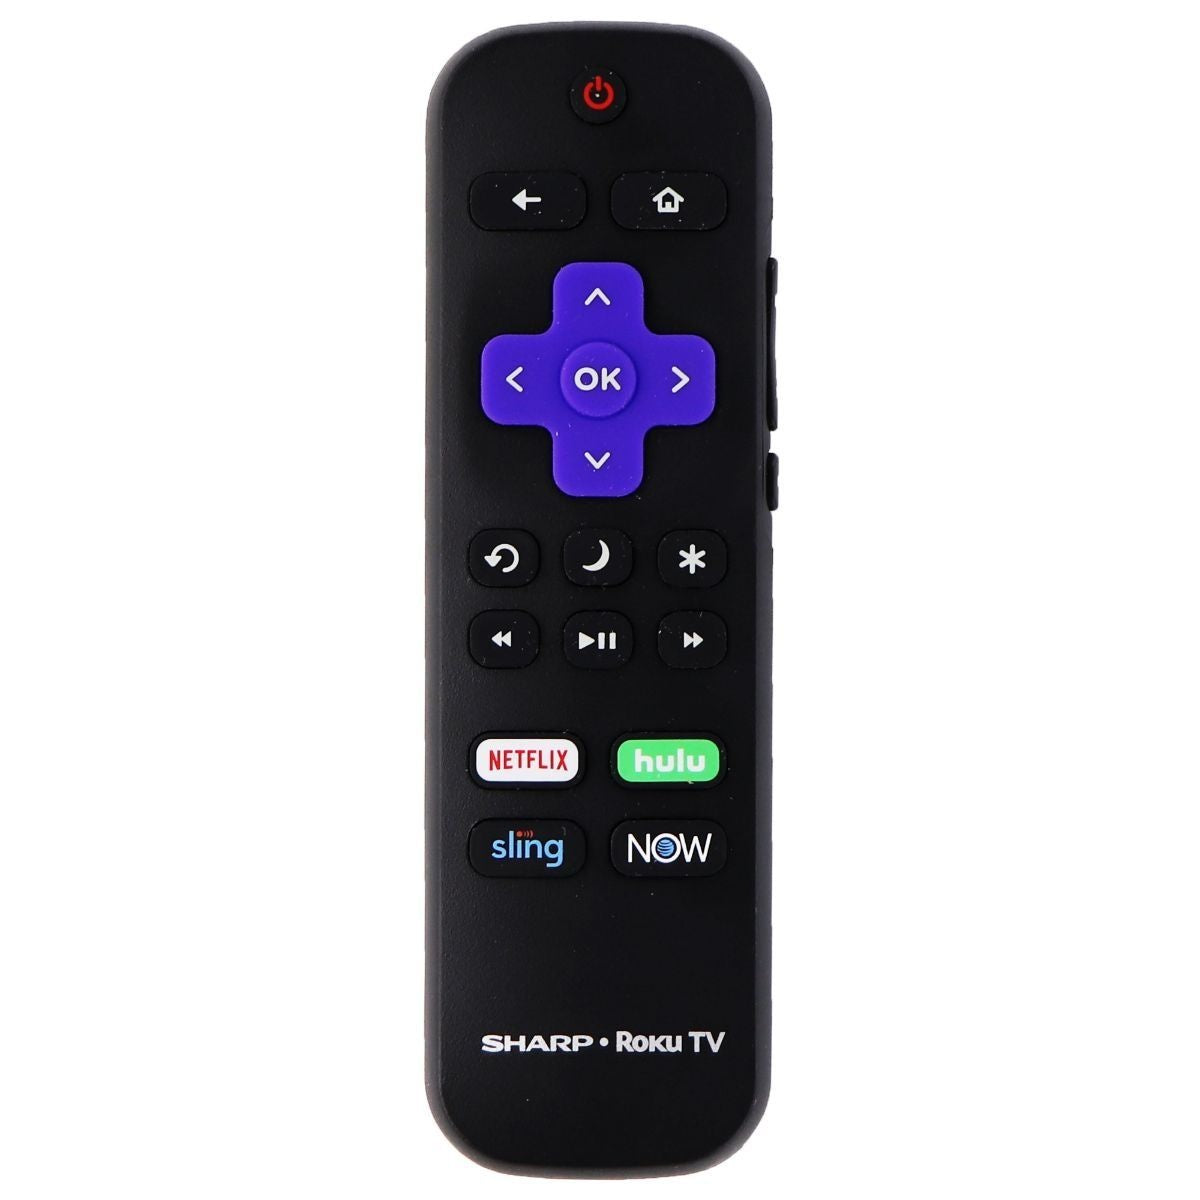 Sharp TV Remote Control (LC-RCRUS-20) for Select Hisense/Sharp TVs - Black TV, Video & Audio Accessories - Remote Controls SHARP    - Simple Cell Bulk Wholesale Pricing - USA Seller